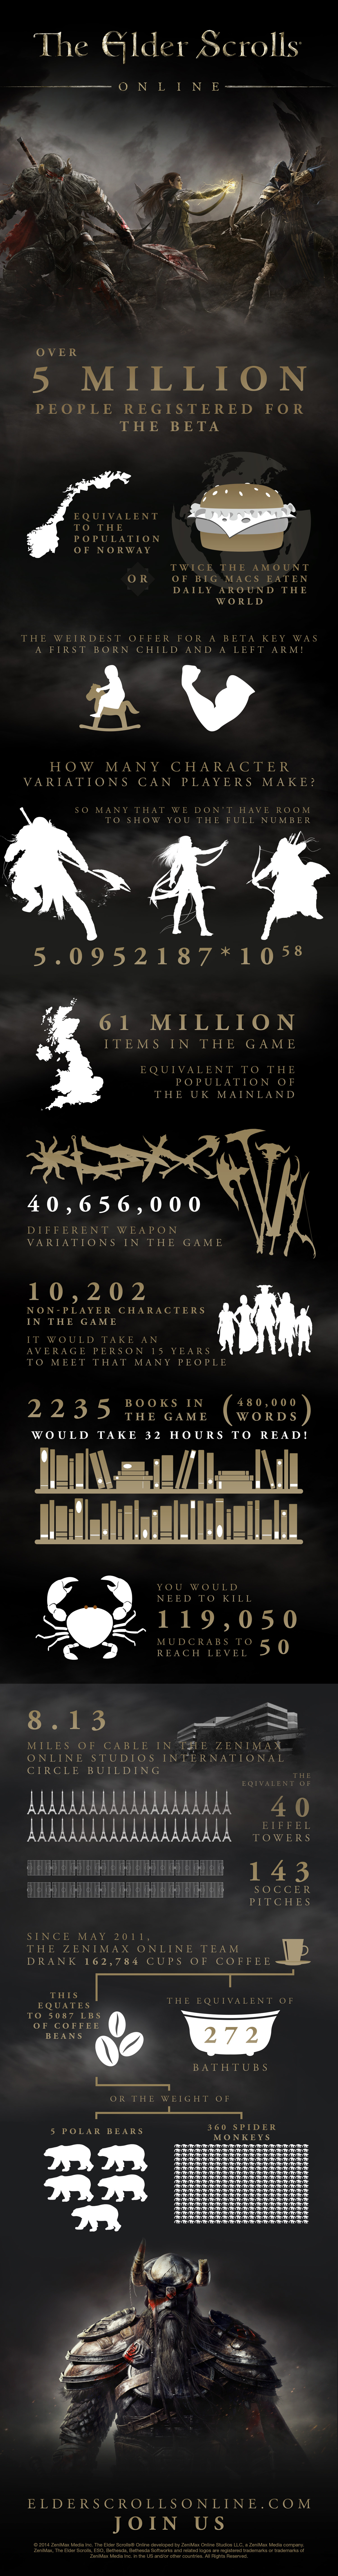 The Elder Scrolls Online infographic_English